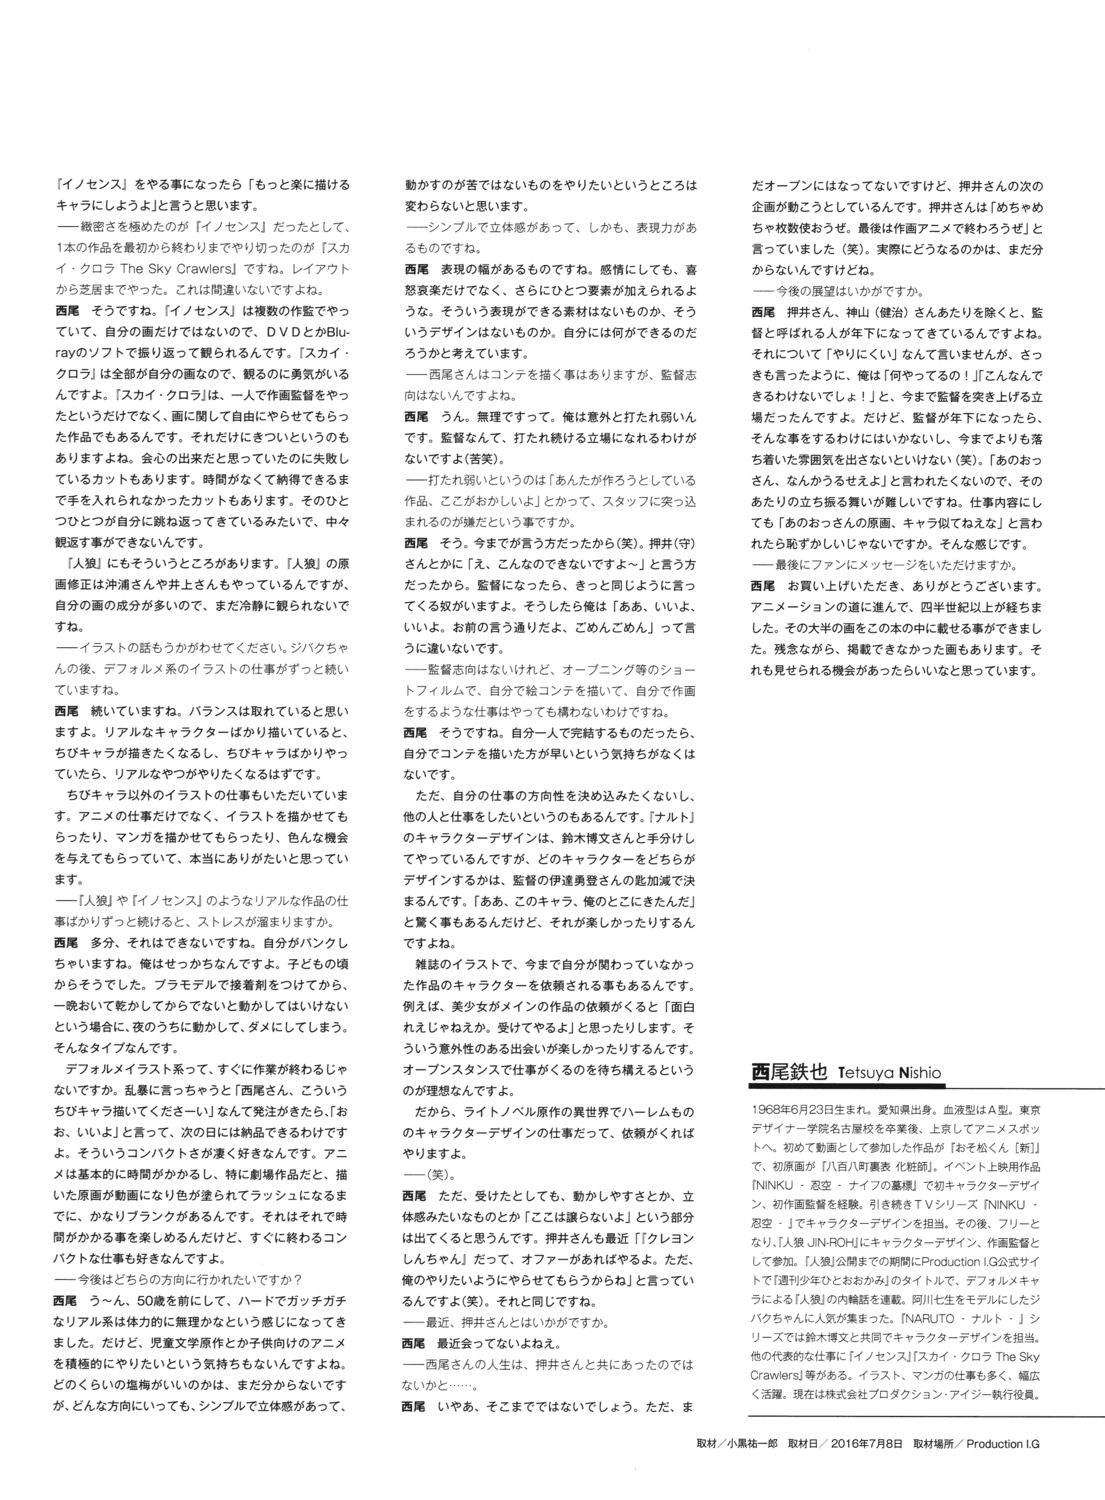 nishio_tetsuya possible_duplicate text